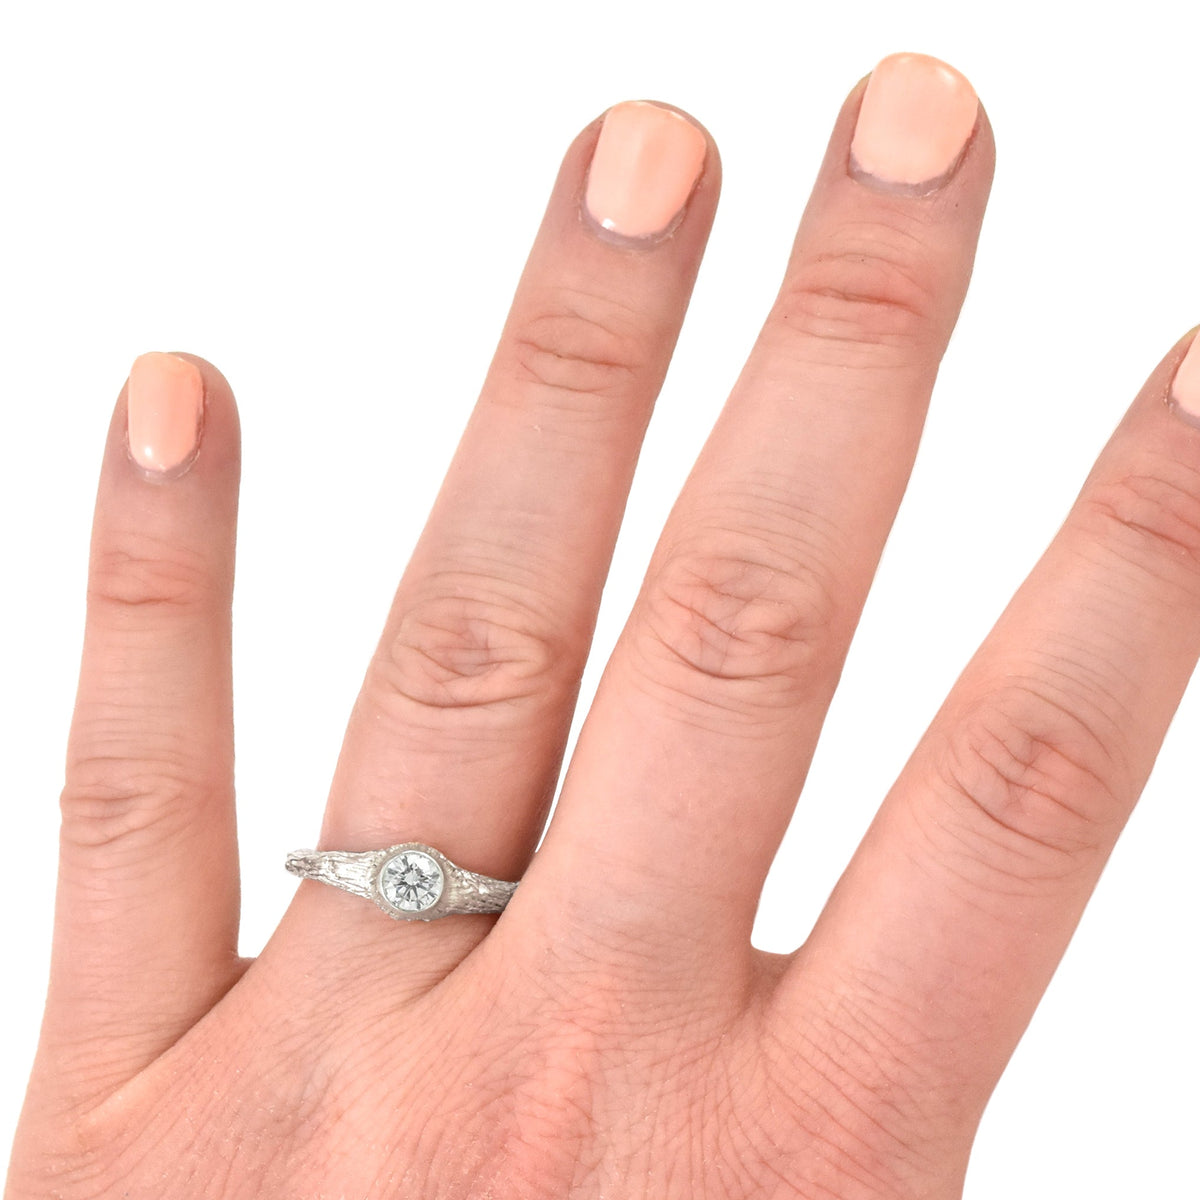 Gold Heartwood Diamond Ring - your choice of 5mm stone & gold - Wedding Ring Moissanite / 18K Palladium White Gold Moissanite / 14K Rose Gold 6332 - handmade by Beth Millner Jewelry